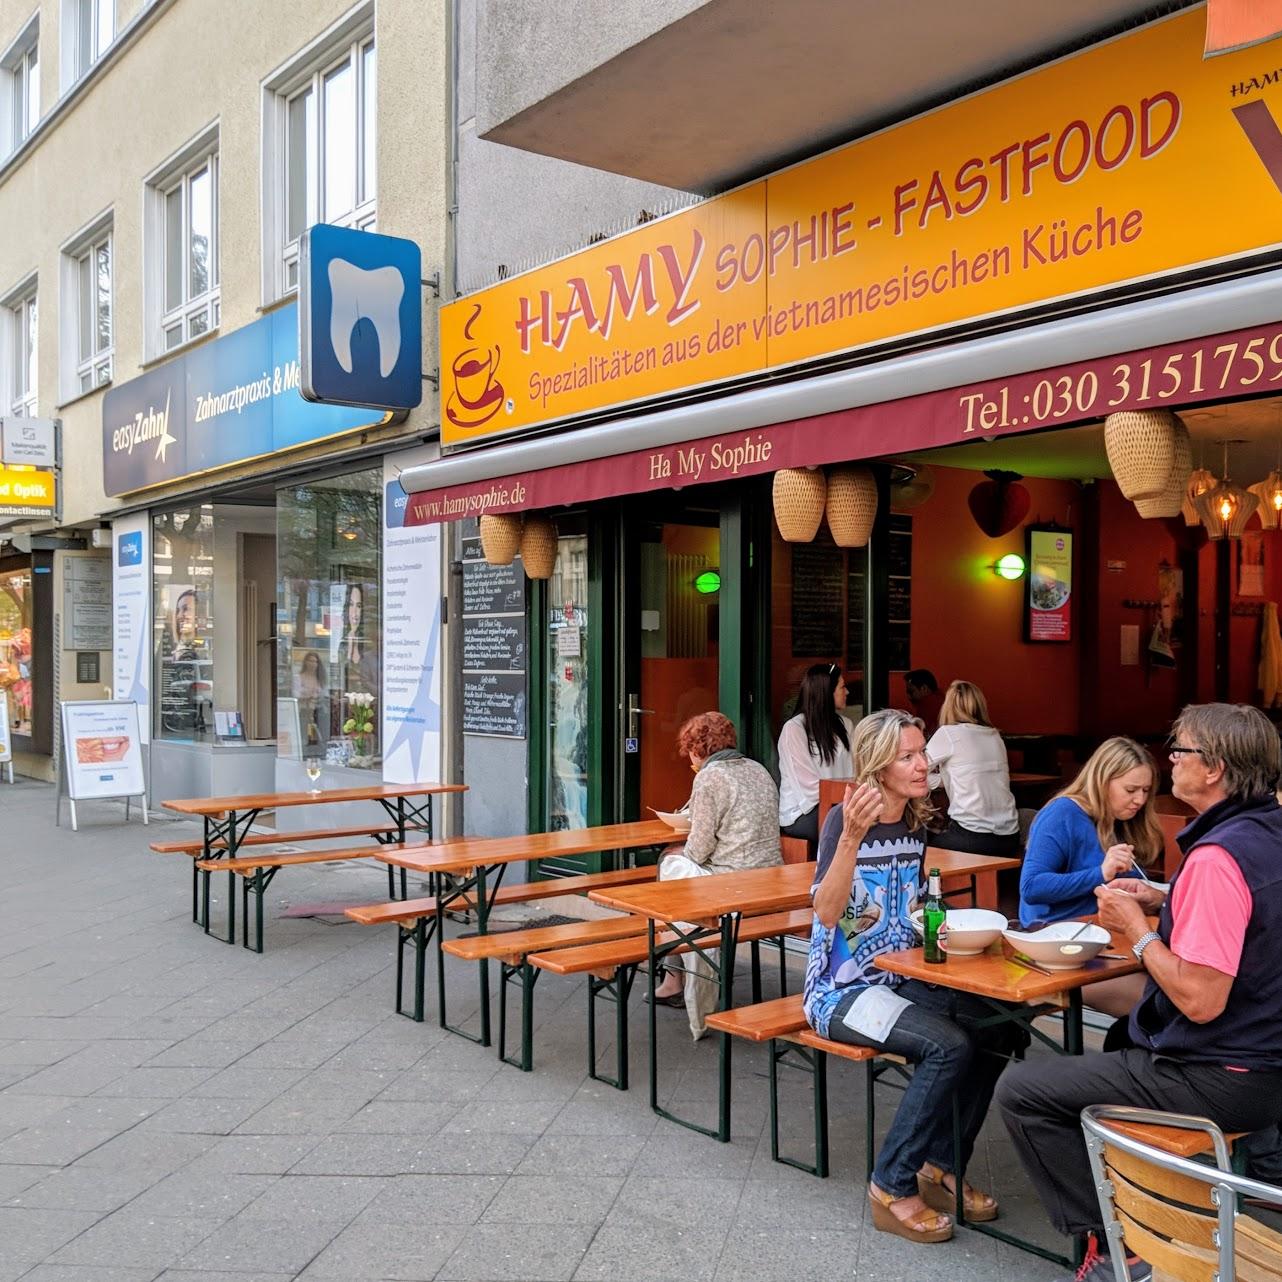 Restaurant "HAMY Sophie" in Berlin